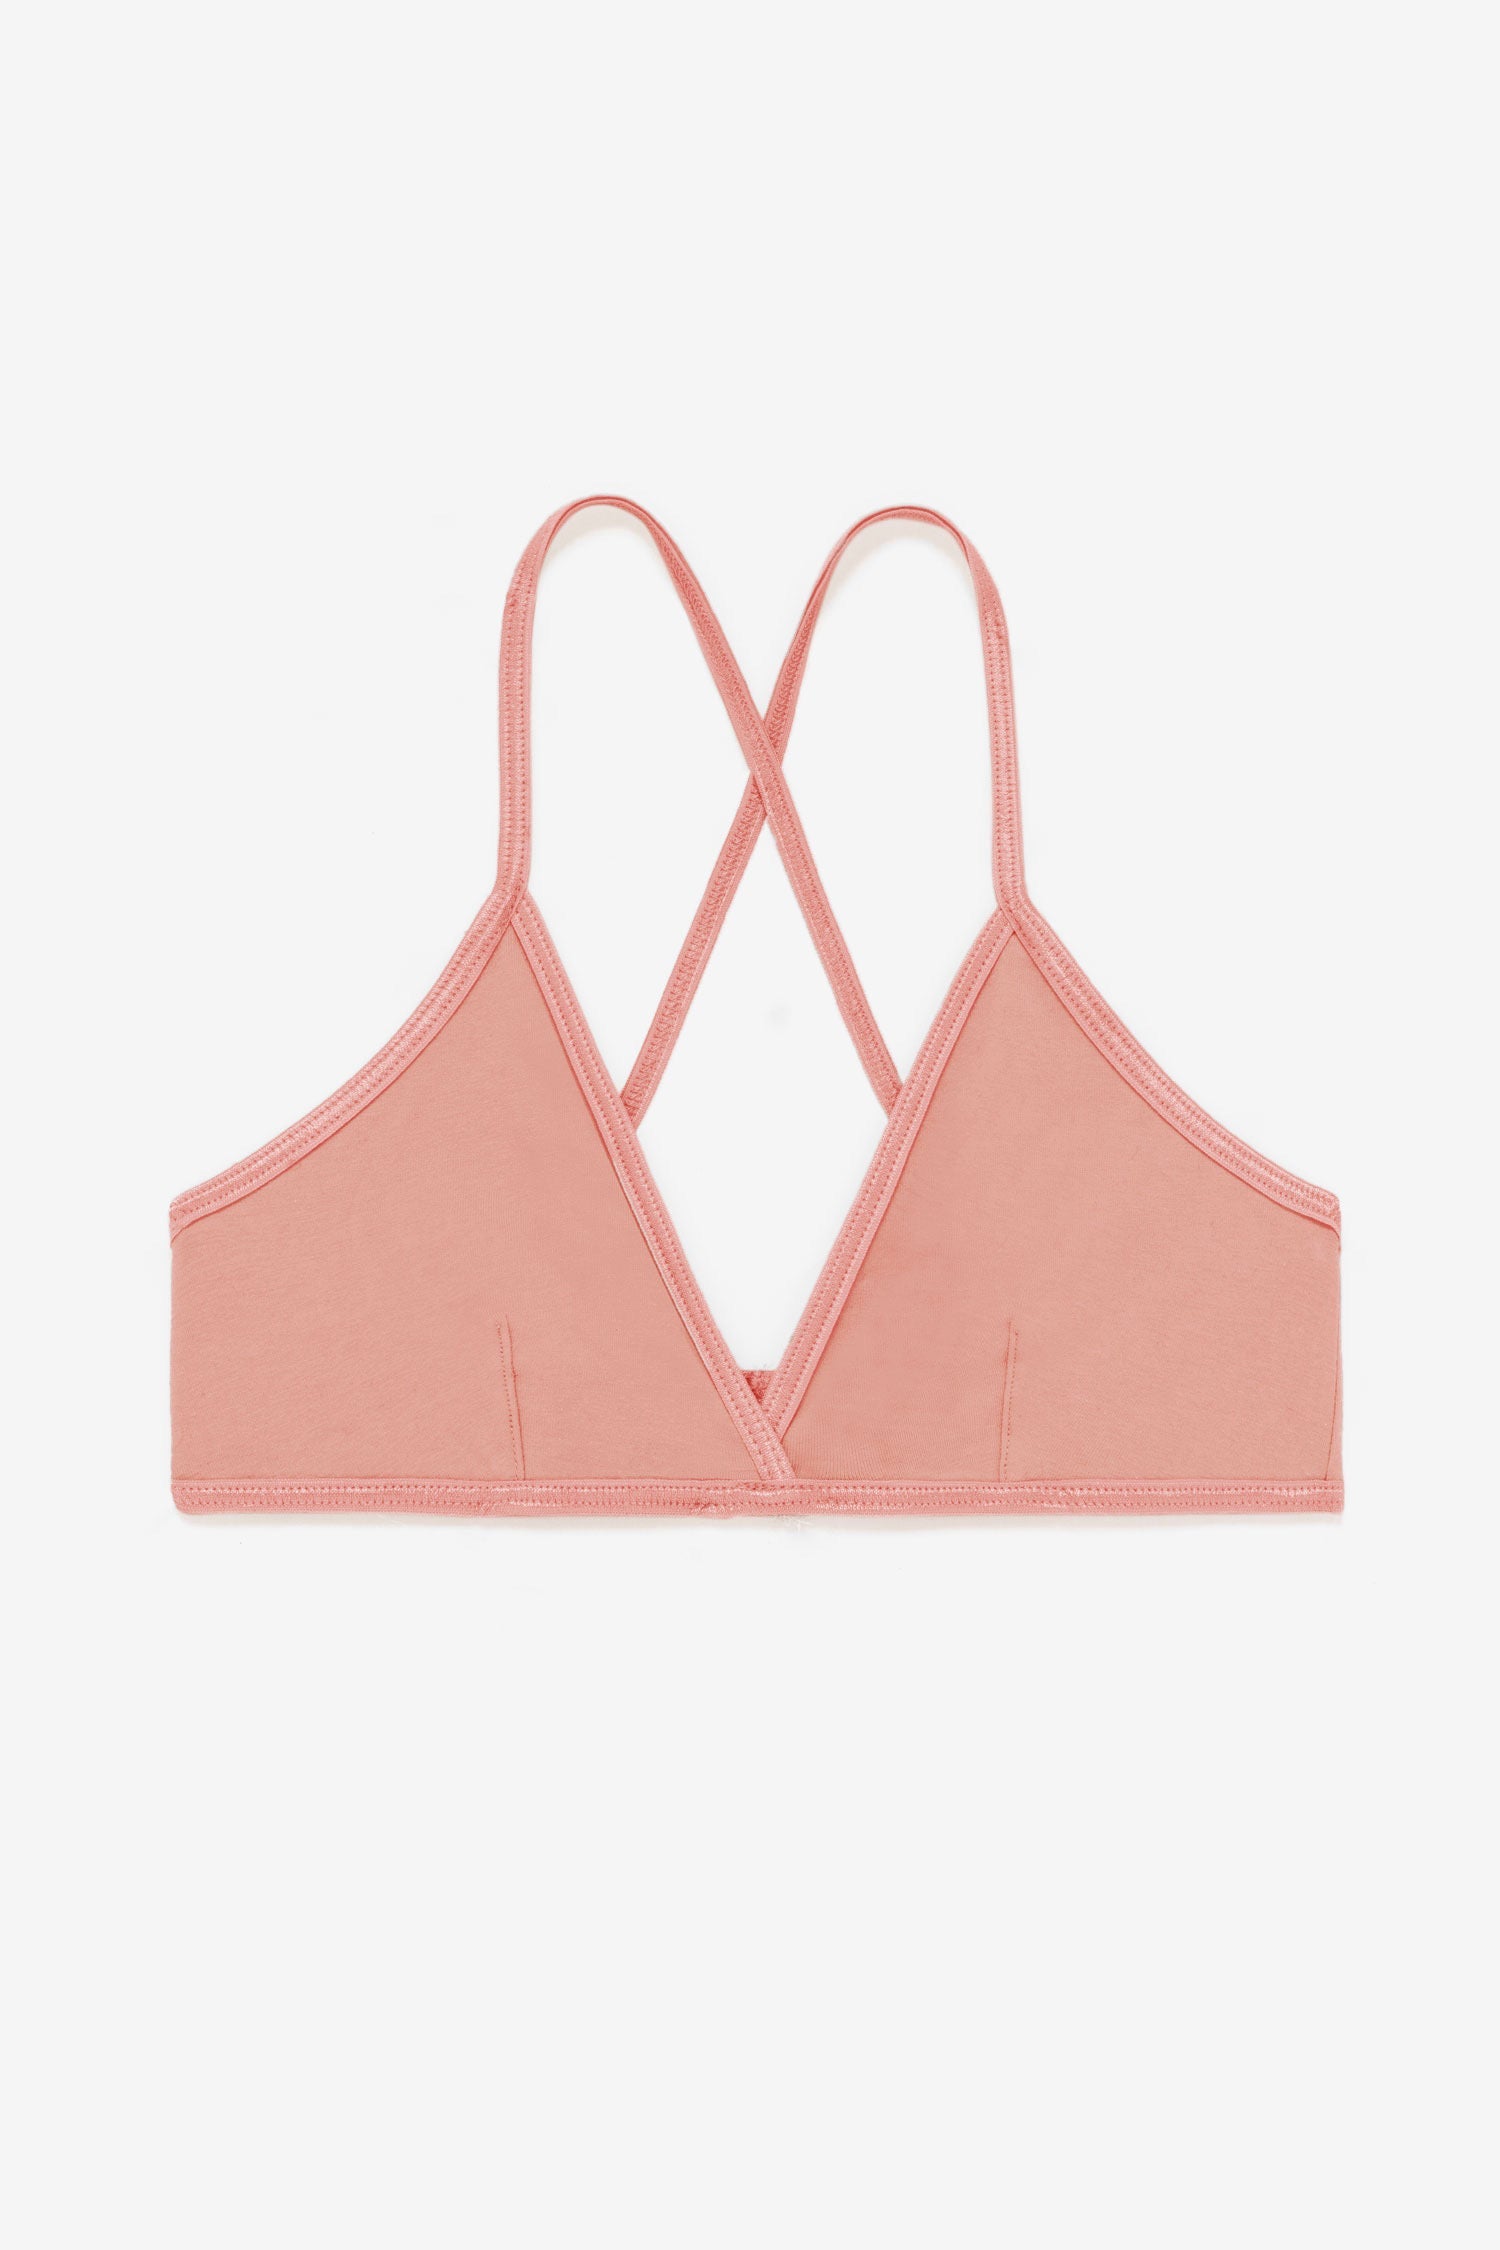 Lacoste Women's Cross Strap Sports Bra - Pink/White – Merchant of